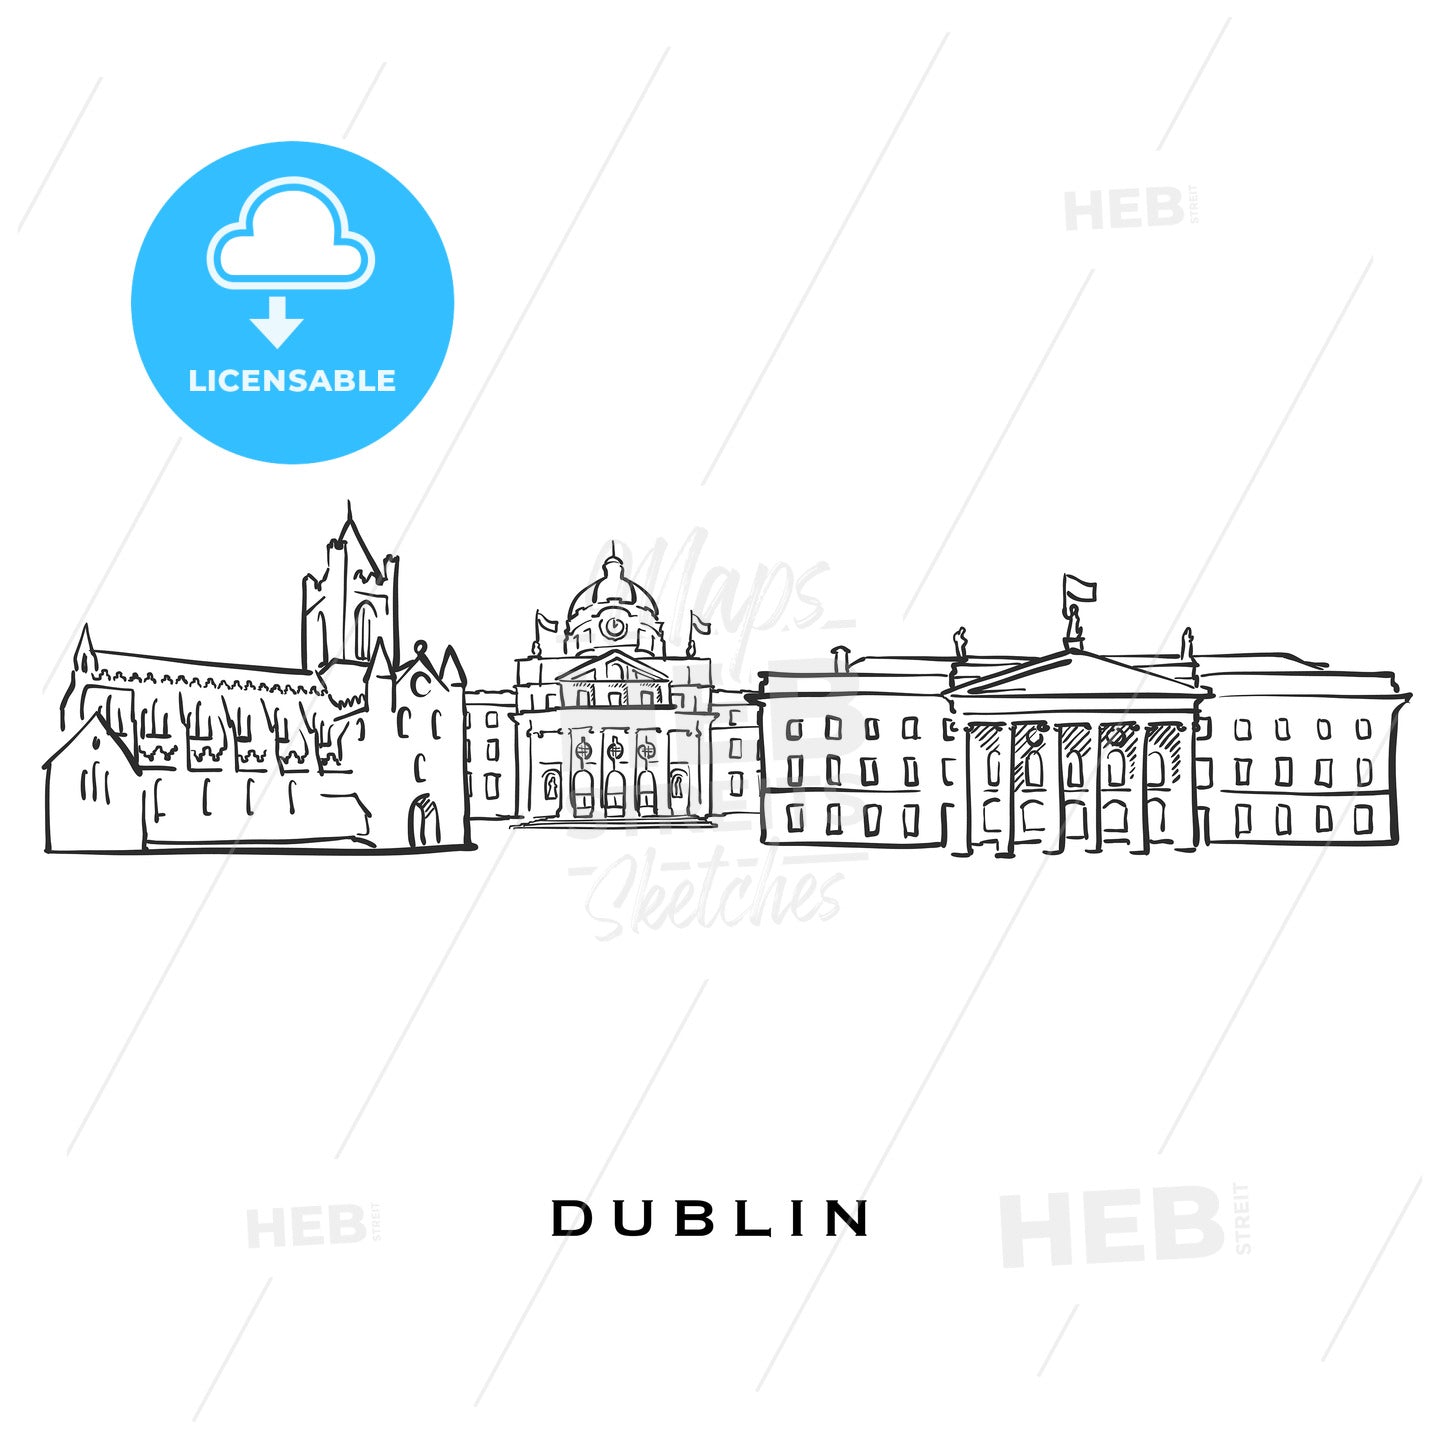 Dublin Ireland famous architecture – instant download